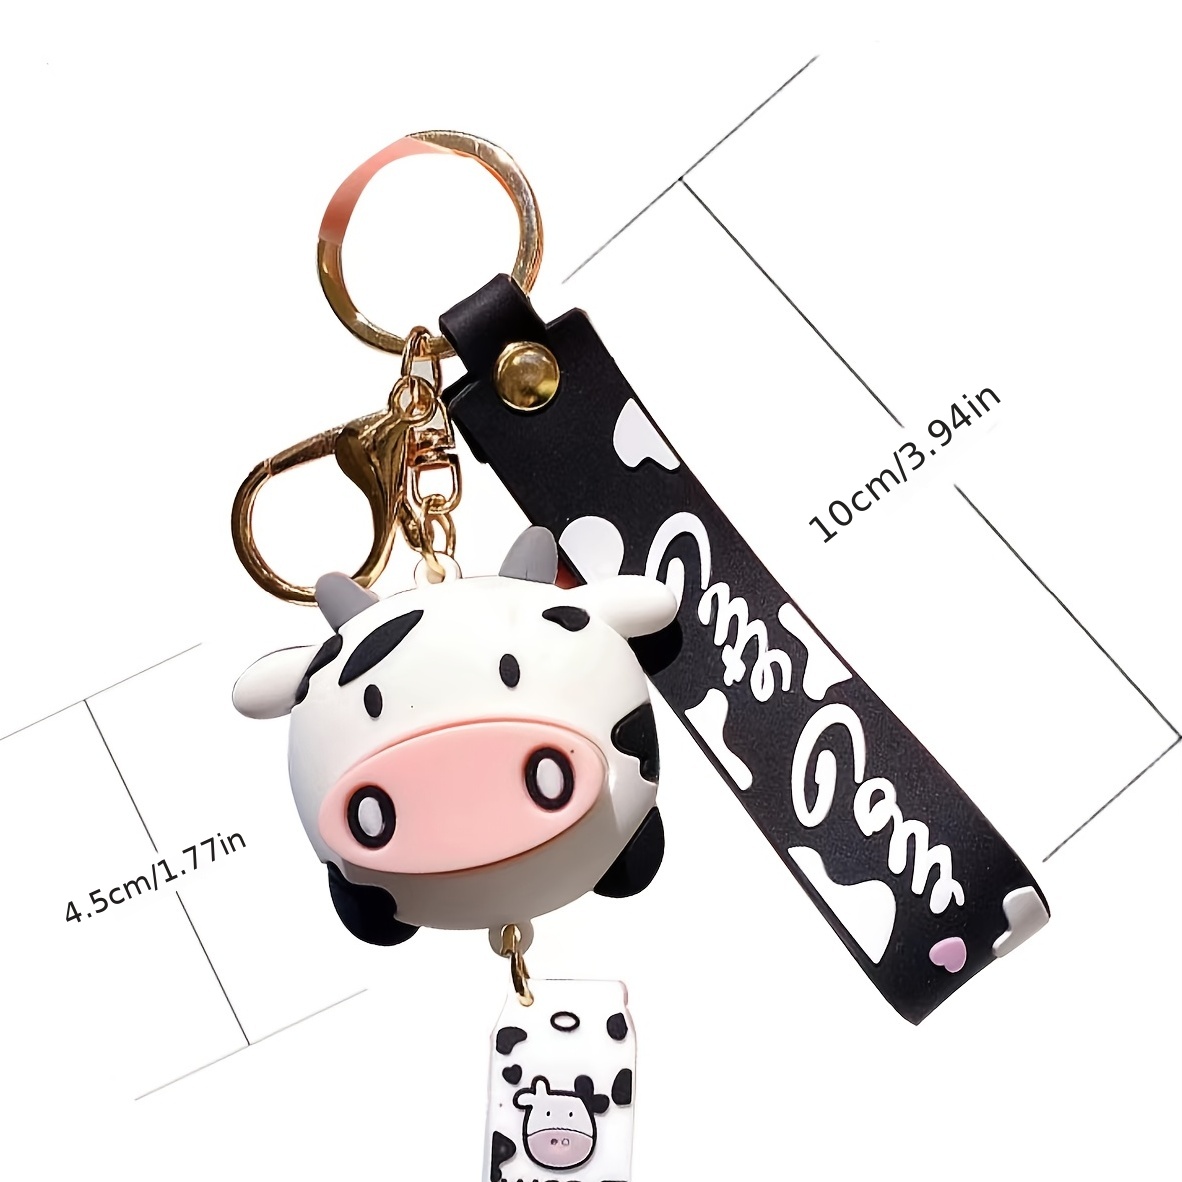 Cartoon Silicone Cows Car Keychain Creative Cute Animal Milk